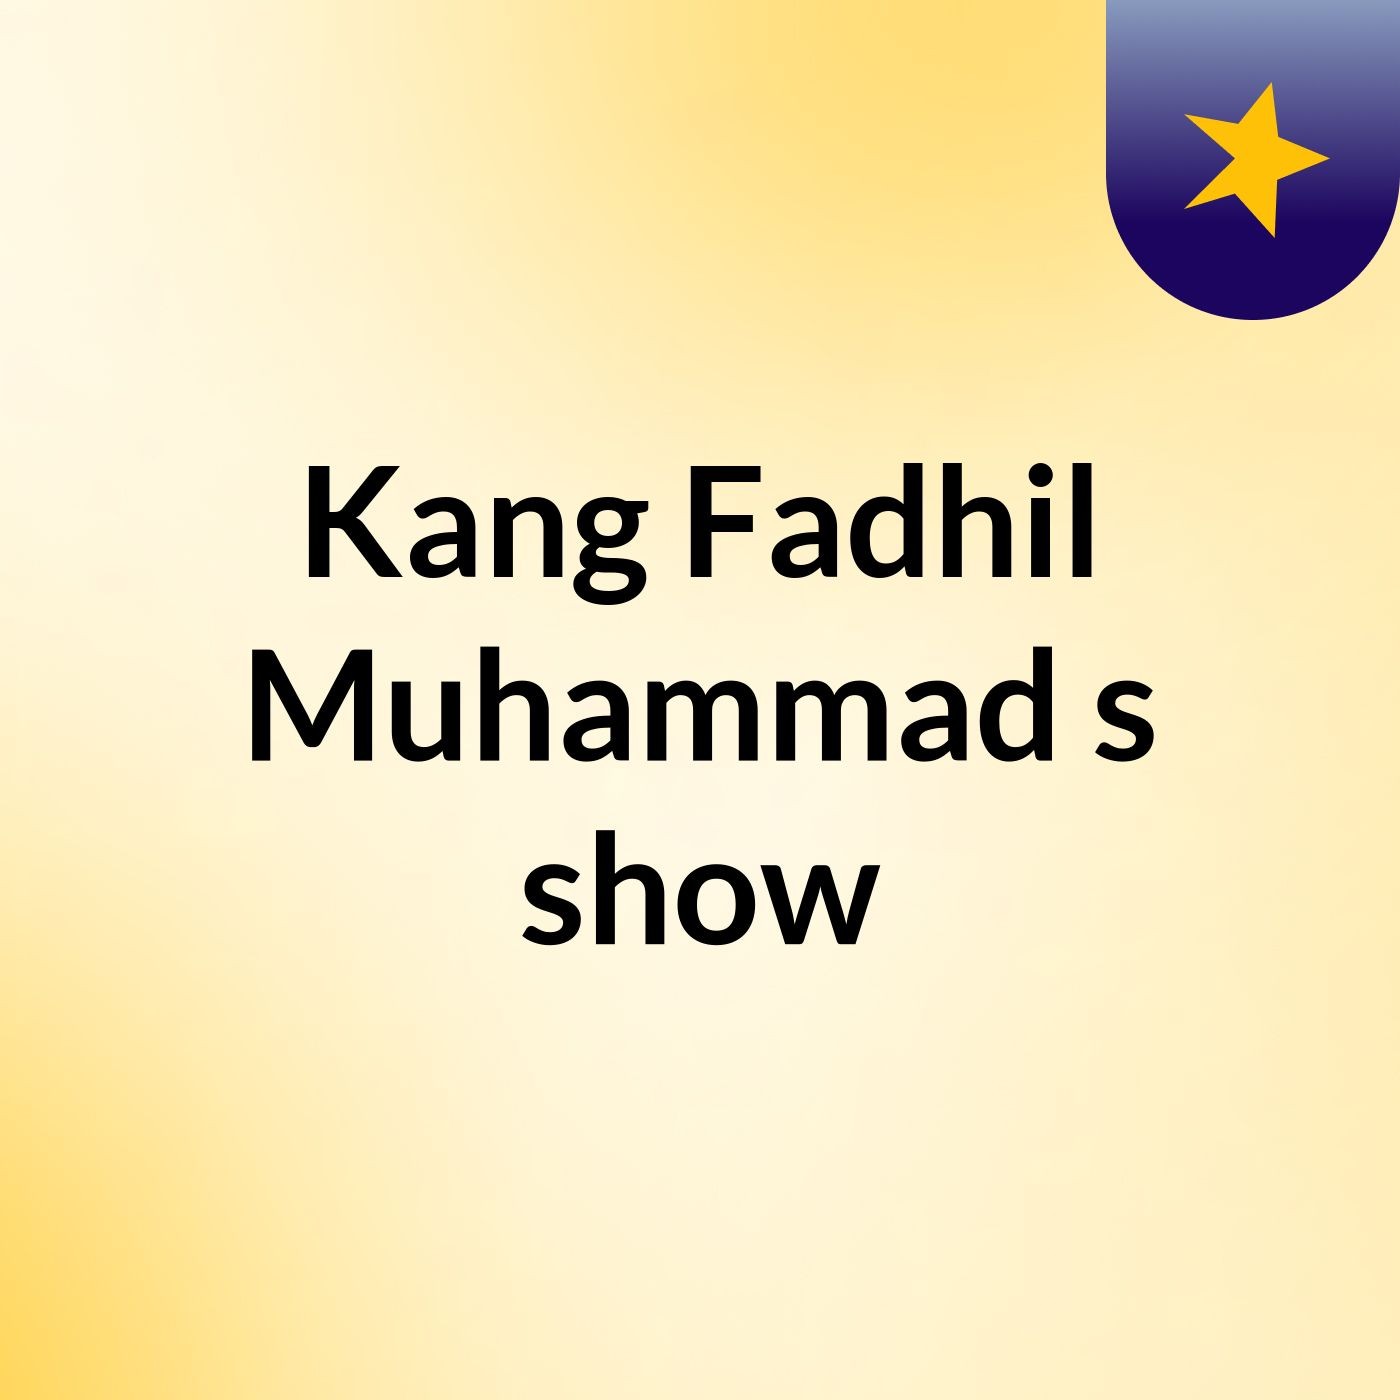 Kang Fadhil Muhammad's show